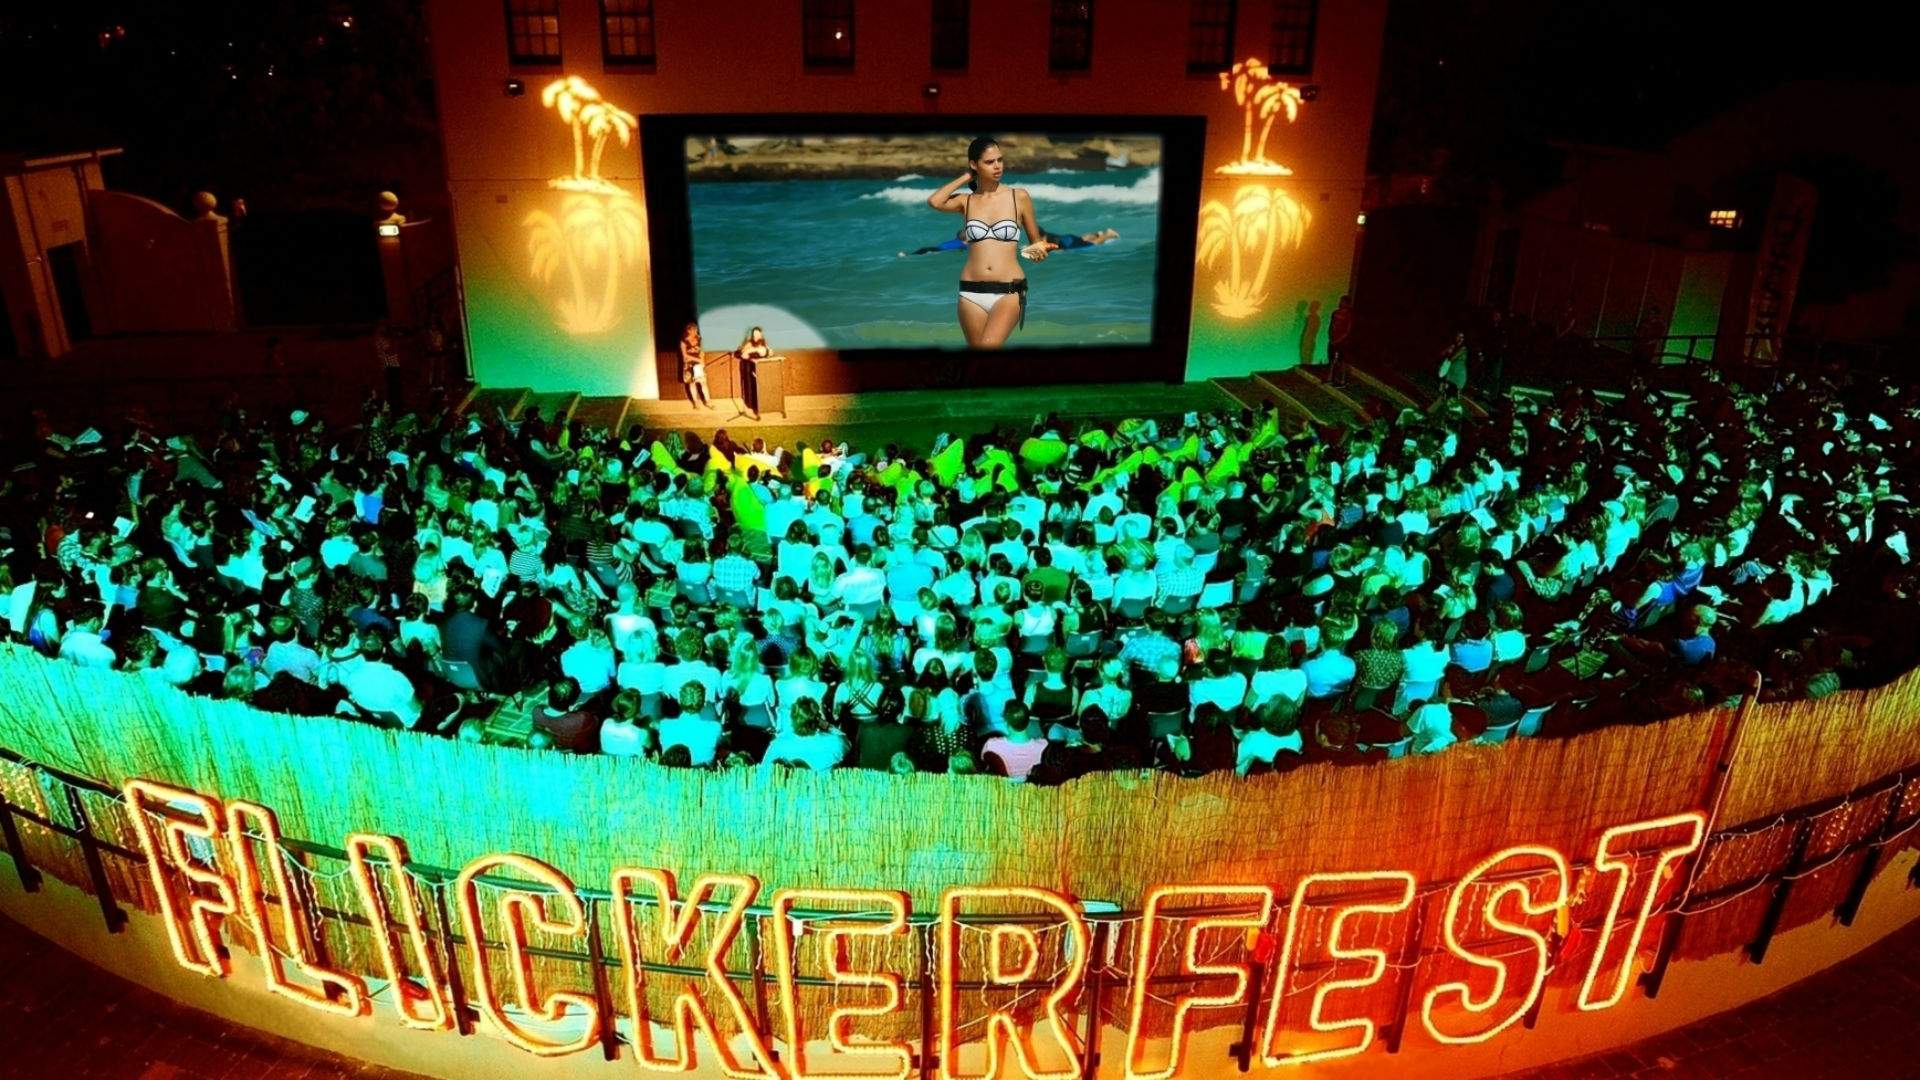 Flickerfest International Short Film Festival Sydney 2019, Sydney